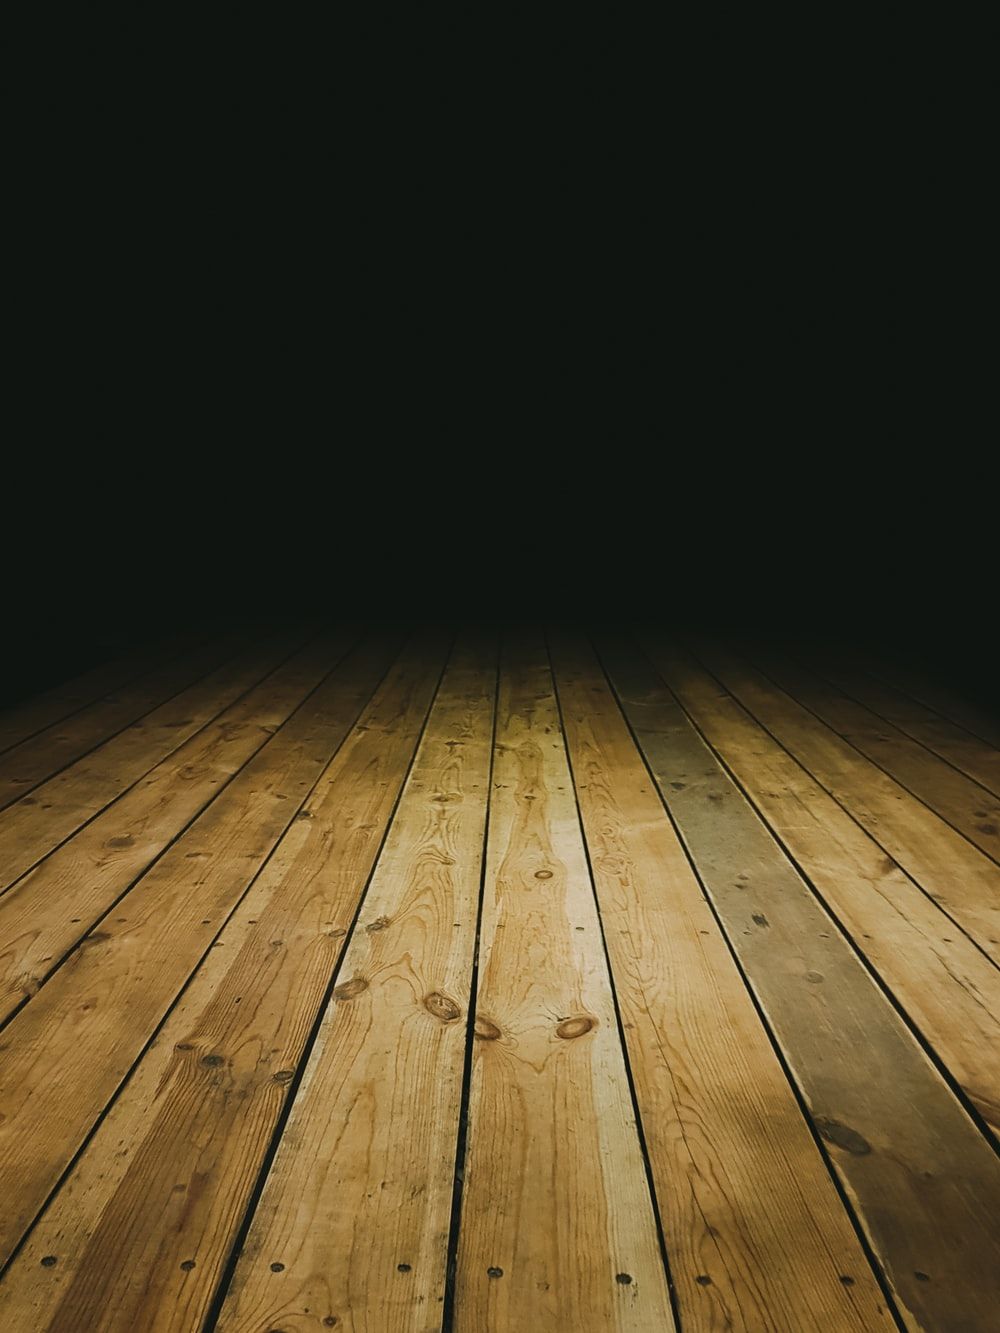 Wooden Floor Picture. Download Free Image